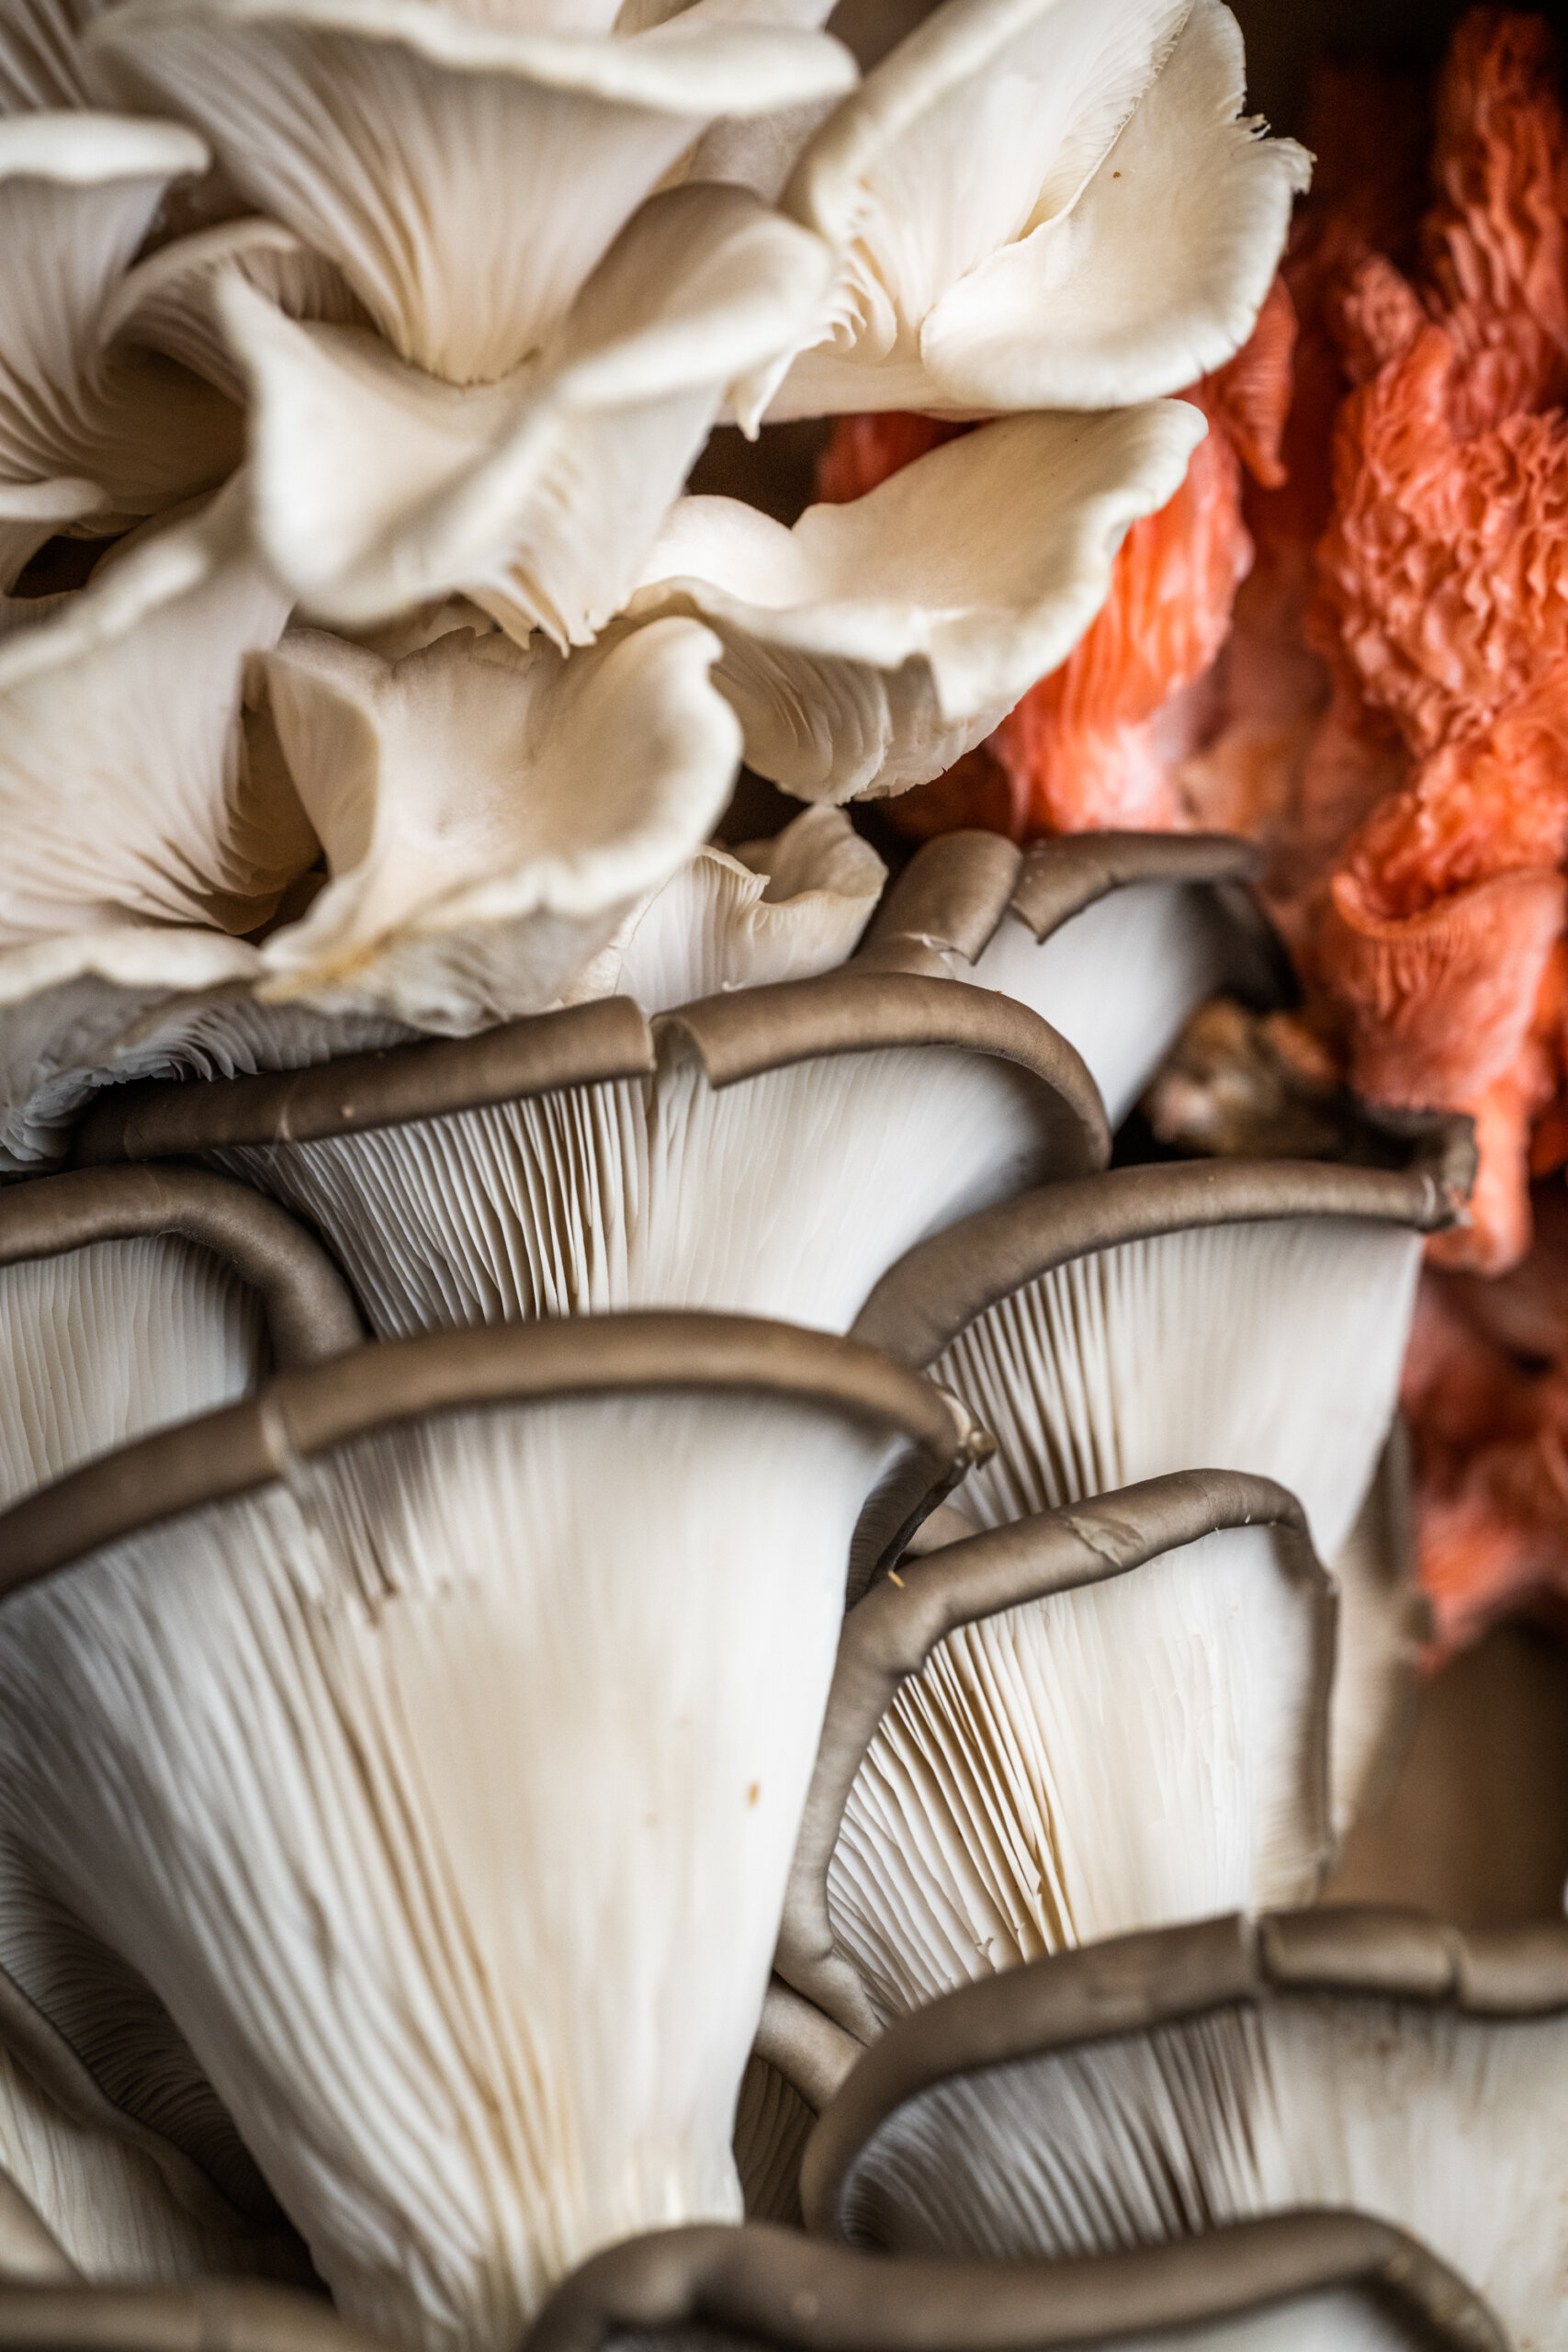 Mediterranean, phoenix and pink oyster mushrooms